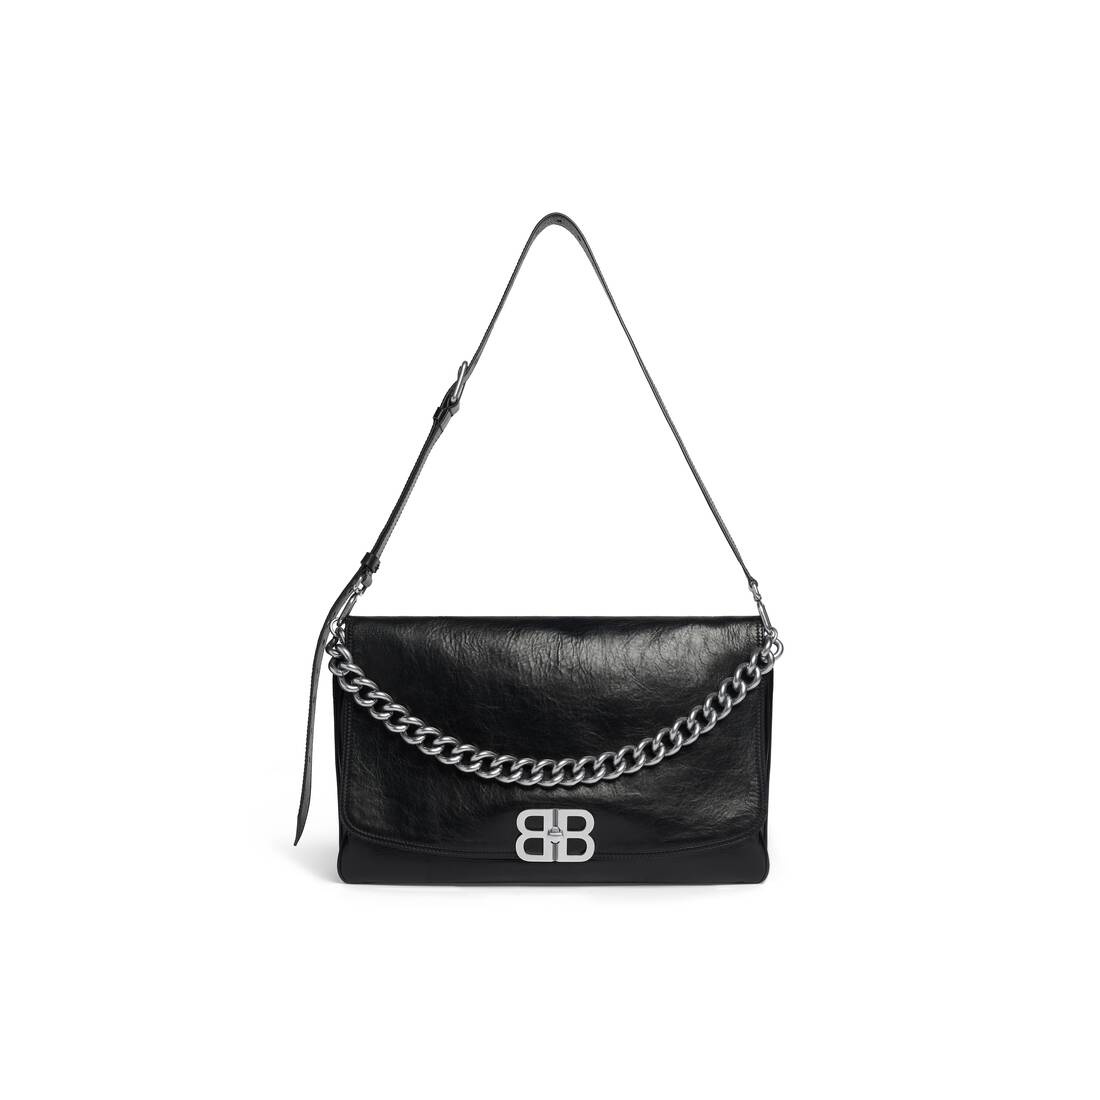 Balenciaga Women's Soft Leather Shoulder Bag